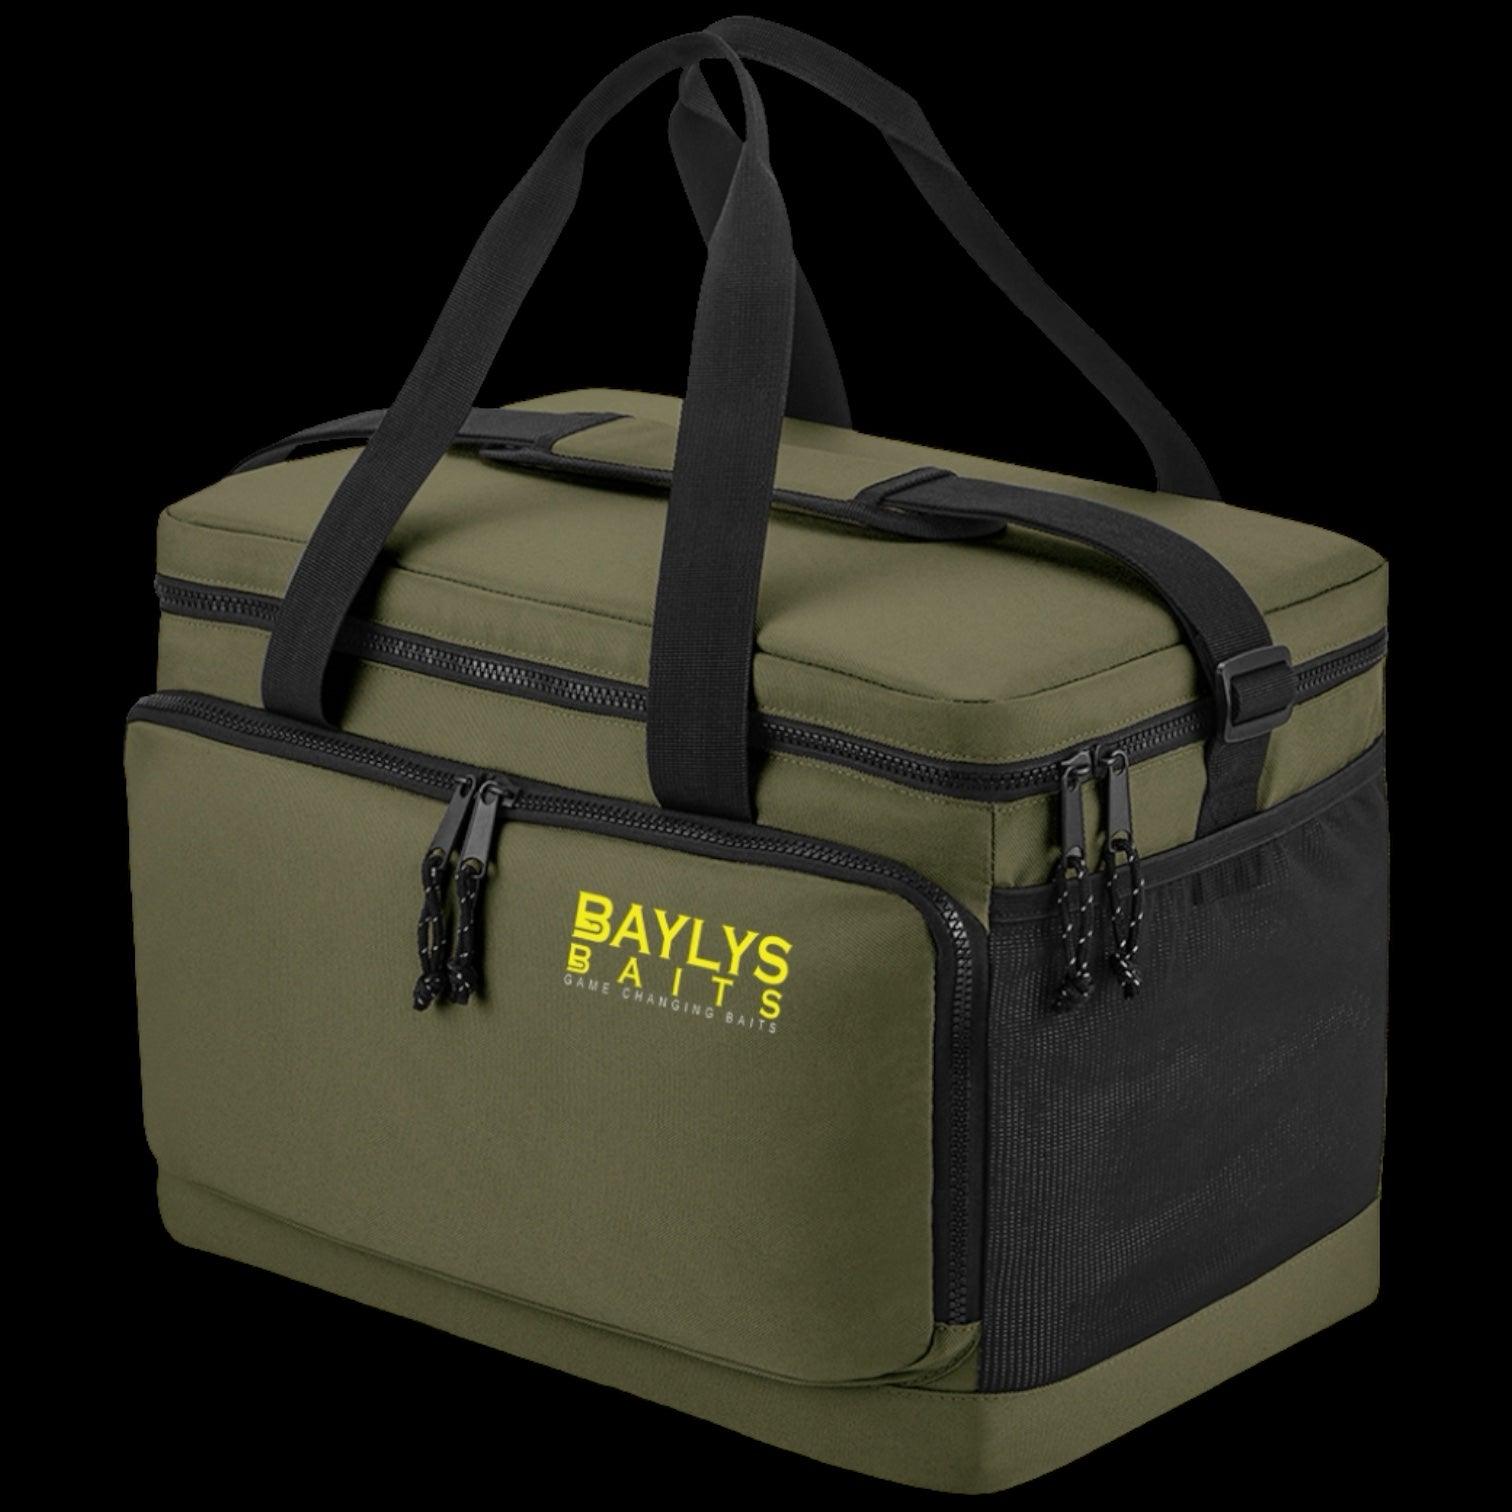 Baylys Cooler Large - Baylys Baits 